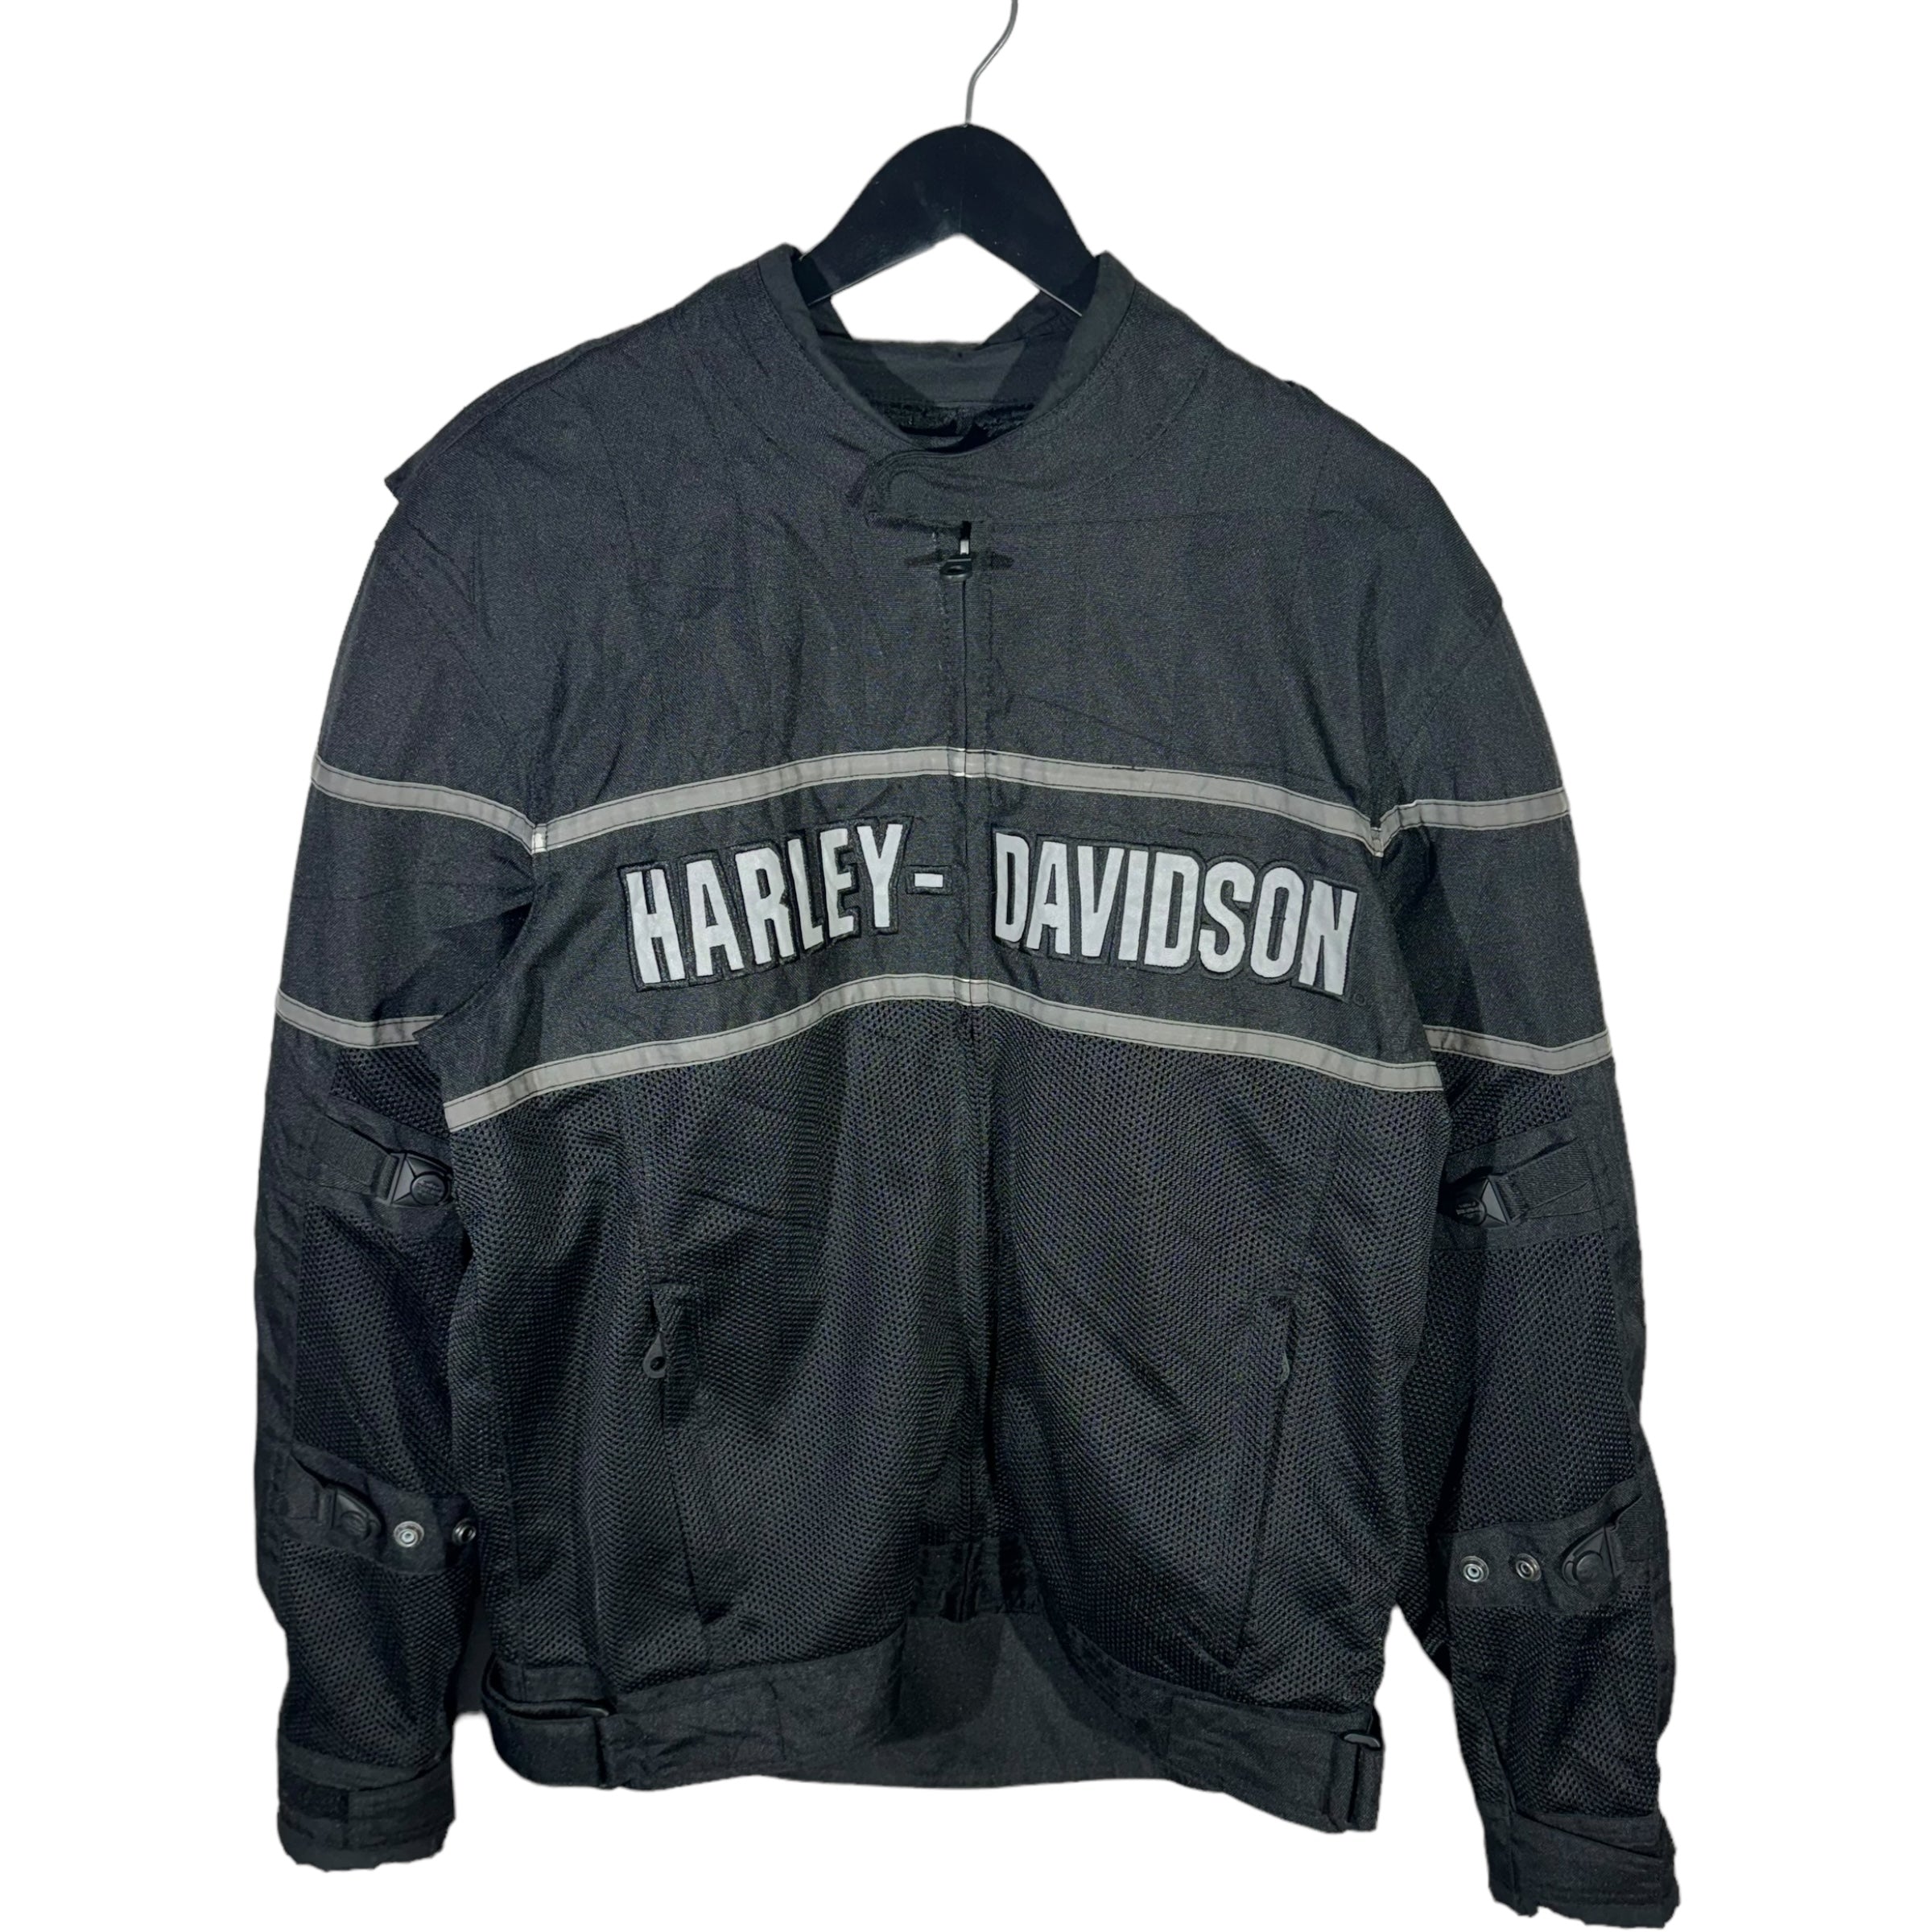 Vintage Harley Davidson Motorycycle Jacket